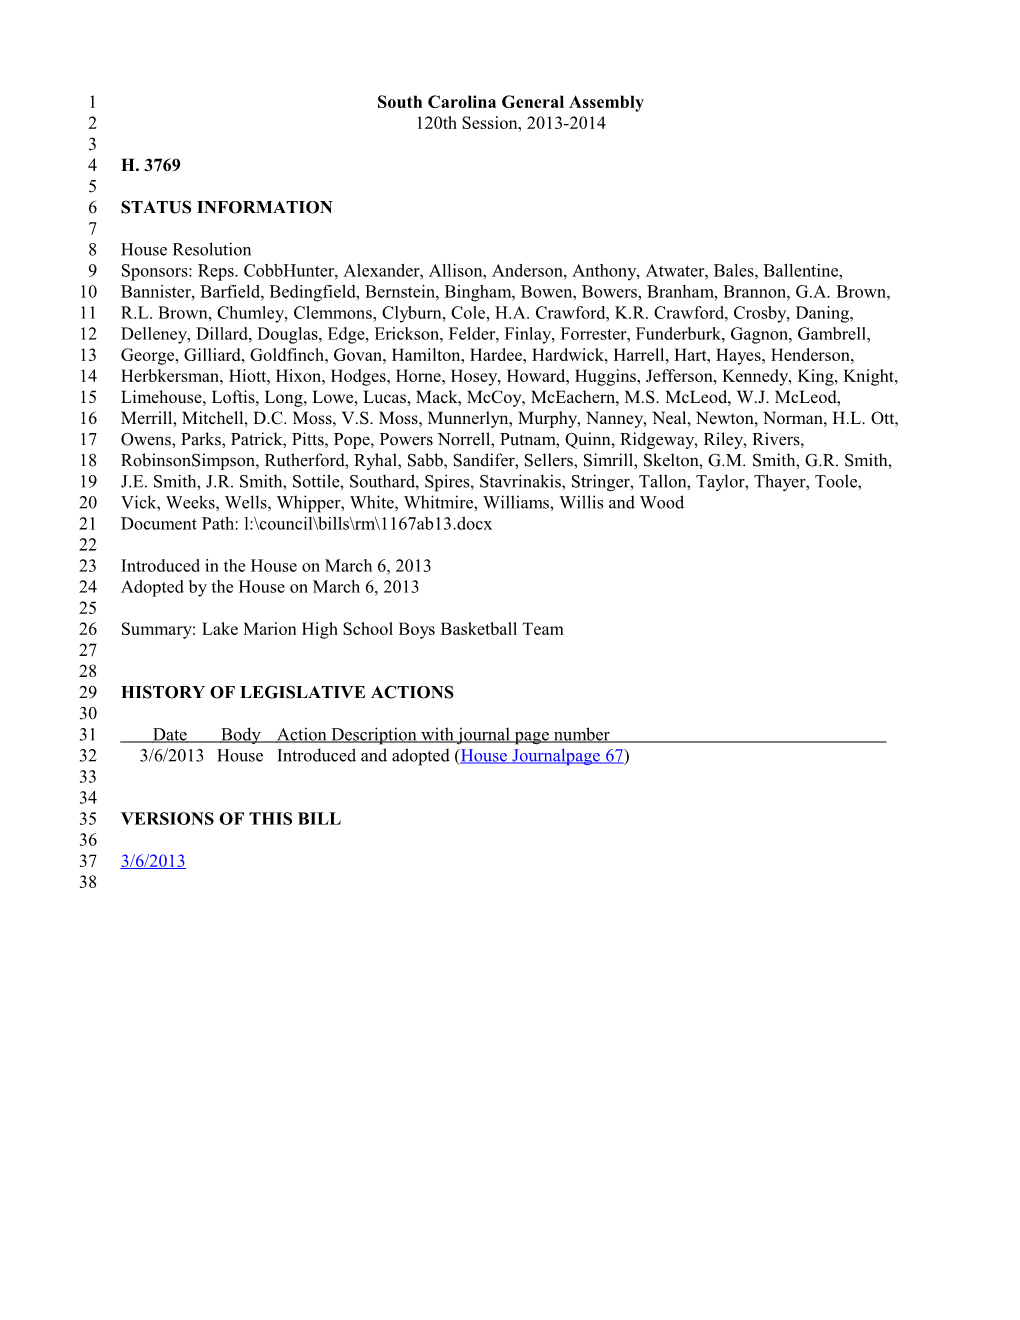 2013-2014 Bill 3769: Lake Marion High School Boys Basketball Team - South Carolina Legislature